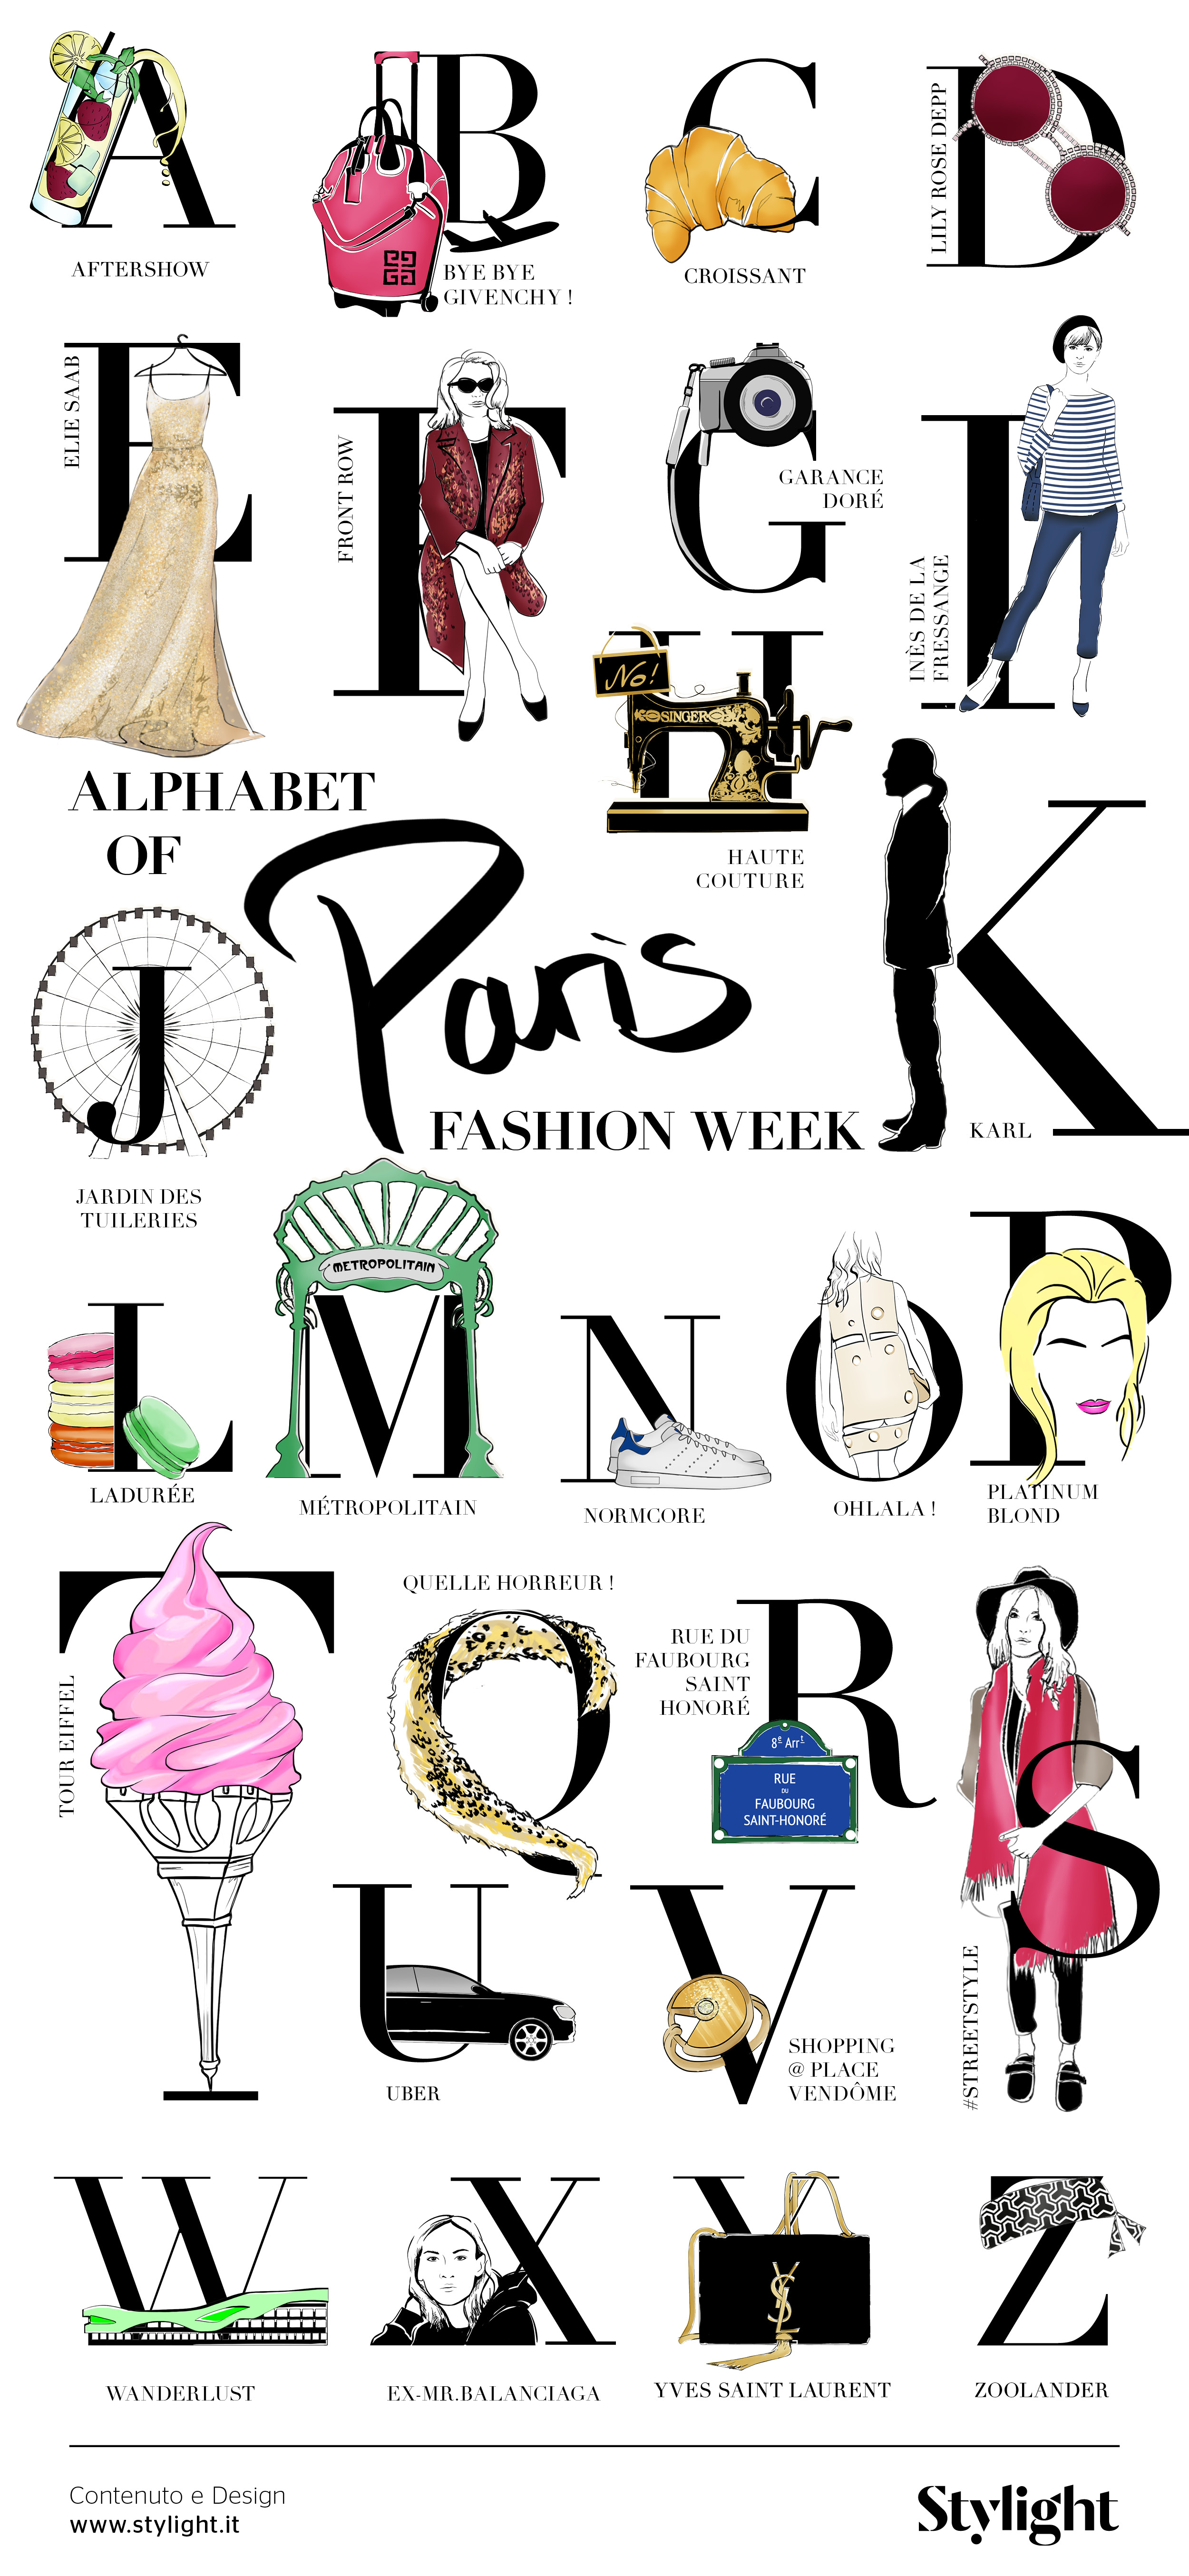 ABC_Paris Fashion week